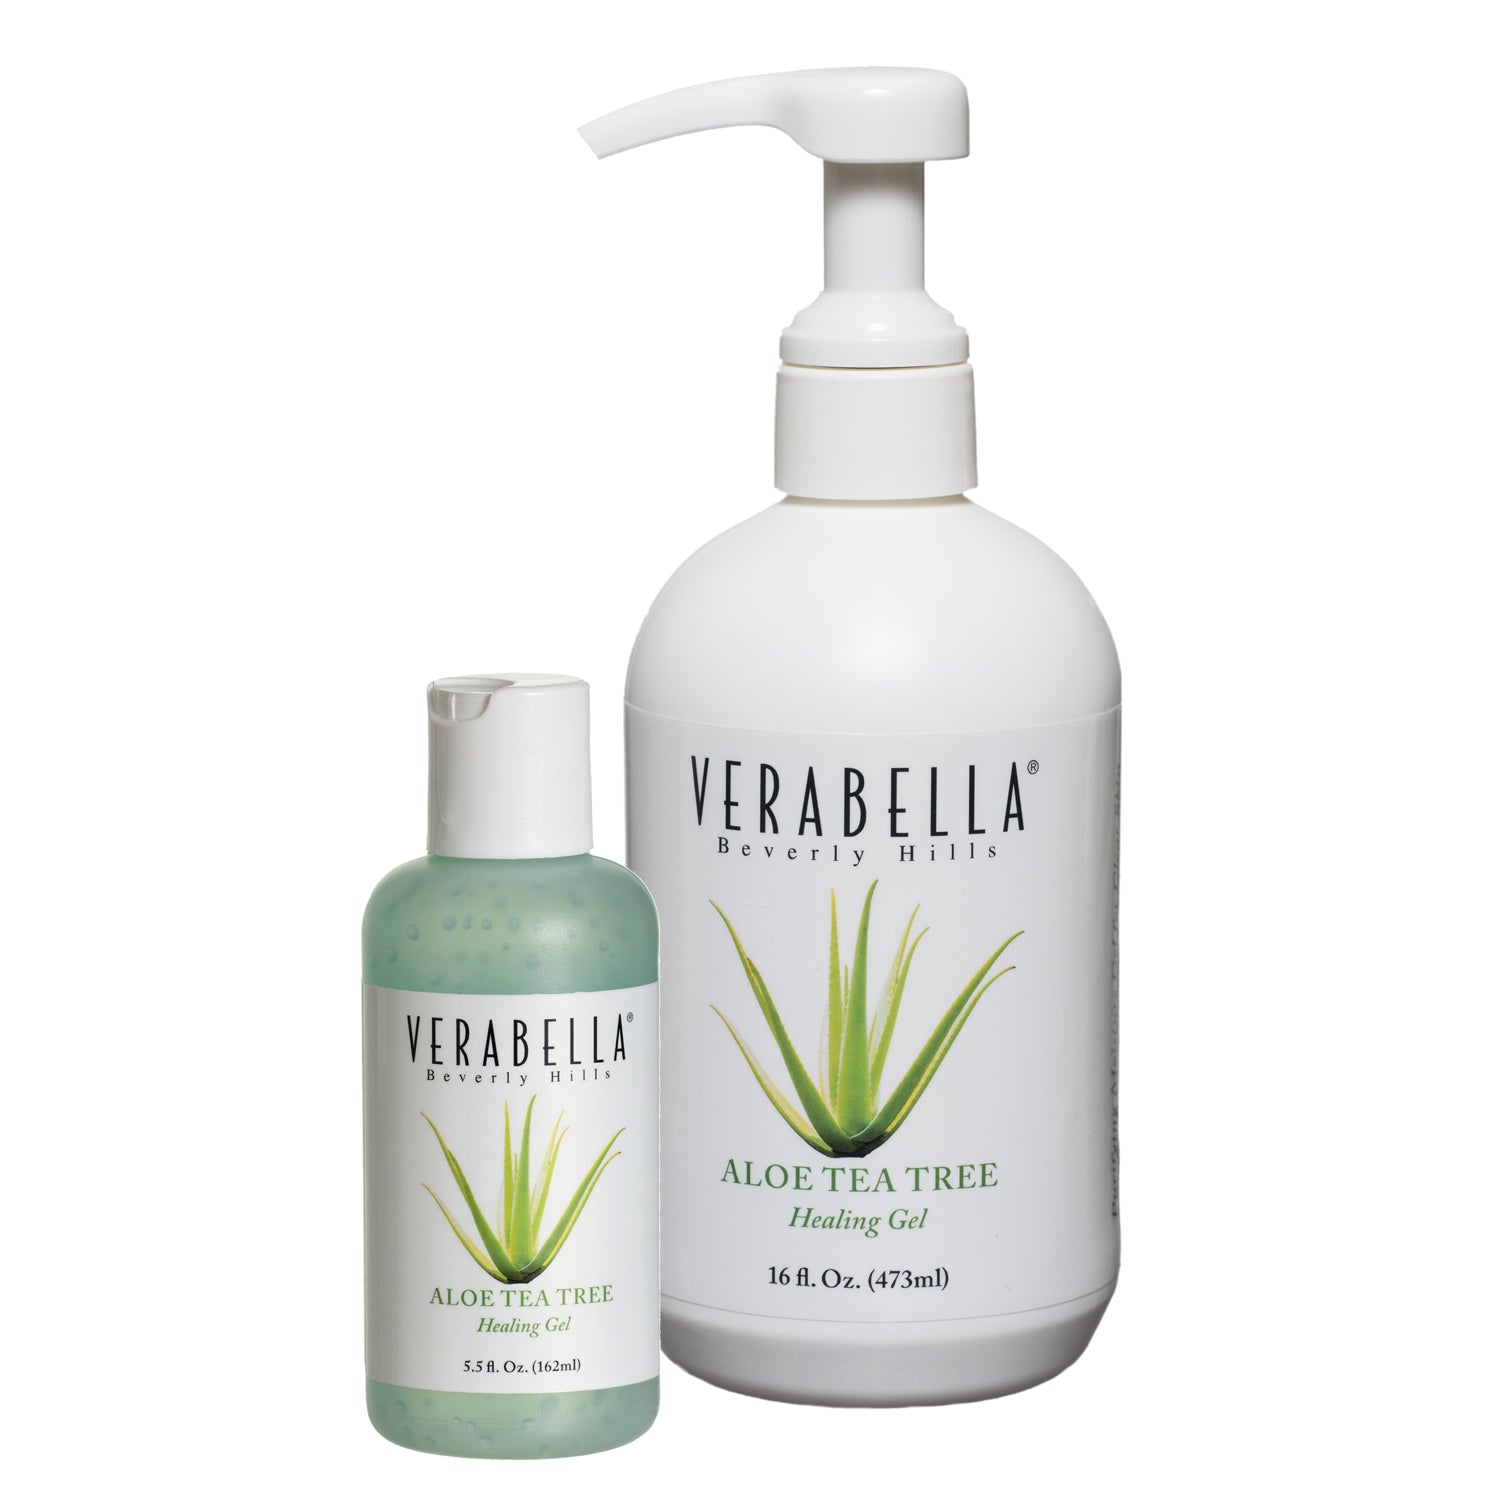 Verabella Aloe Tea Tree Healing Gel in 4 oz and 16 oz